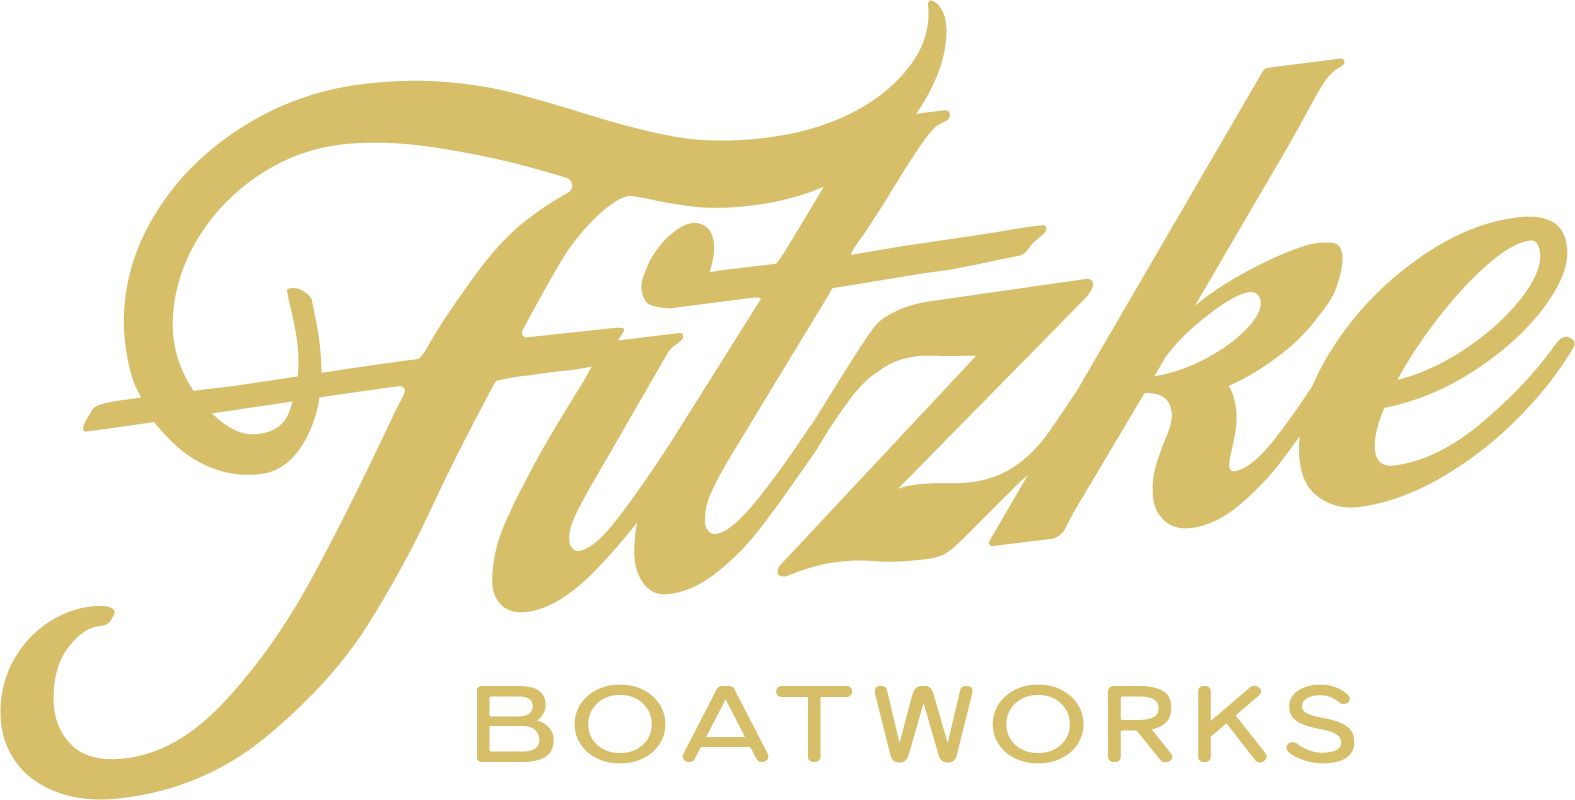 Fitzke Boatworks